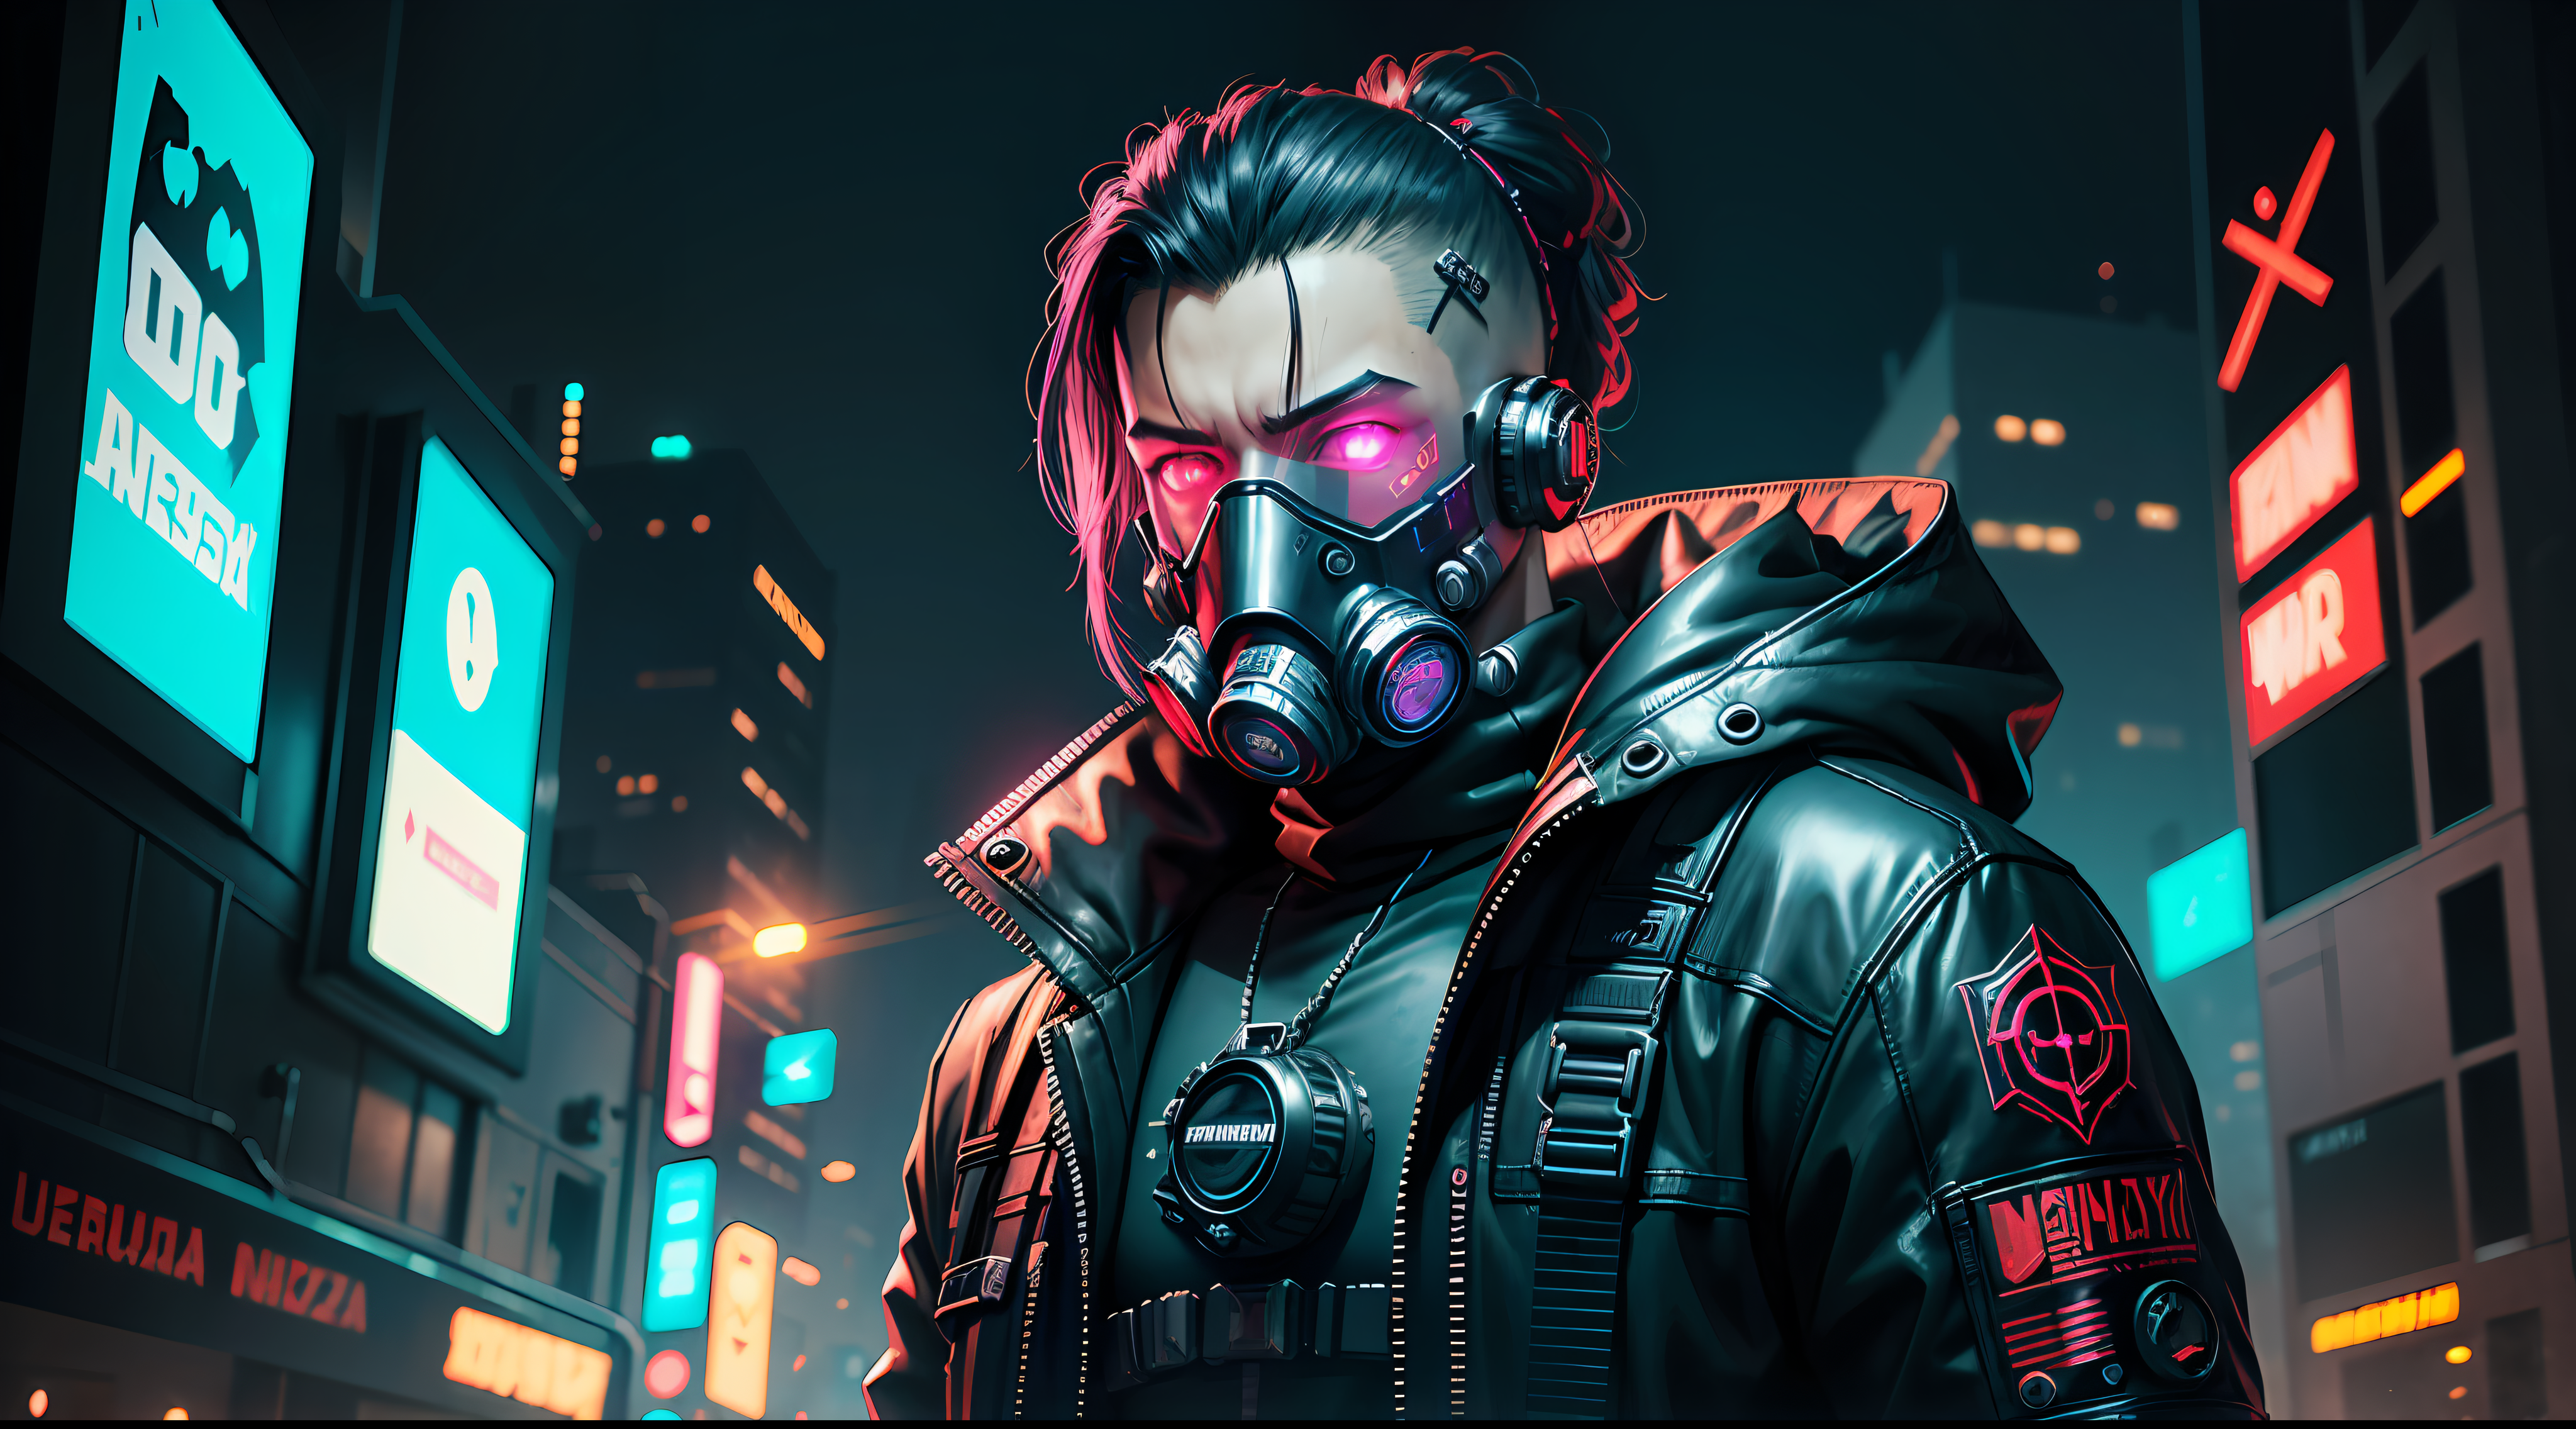 Cyberpunk 2077  4K Wallpaper 2018 + Game Info! by NurBoyXVI on DeviantArt